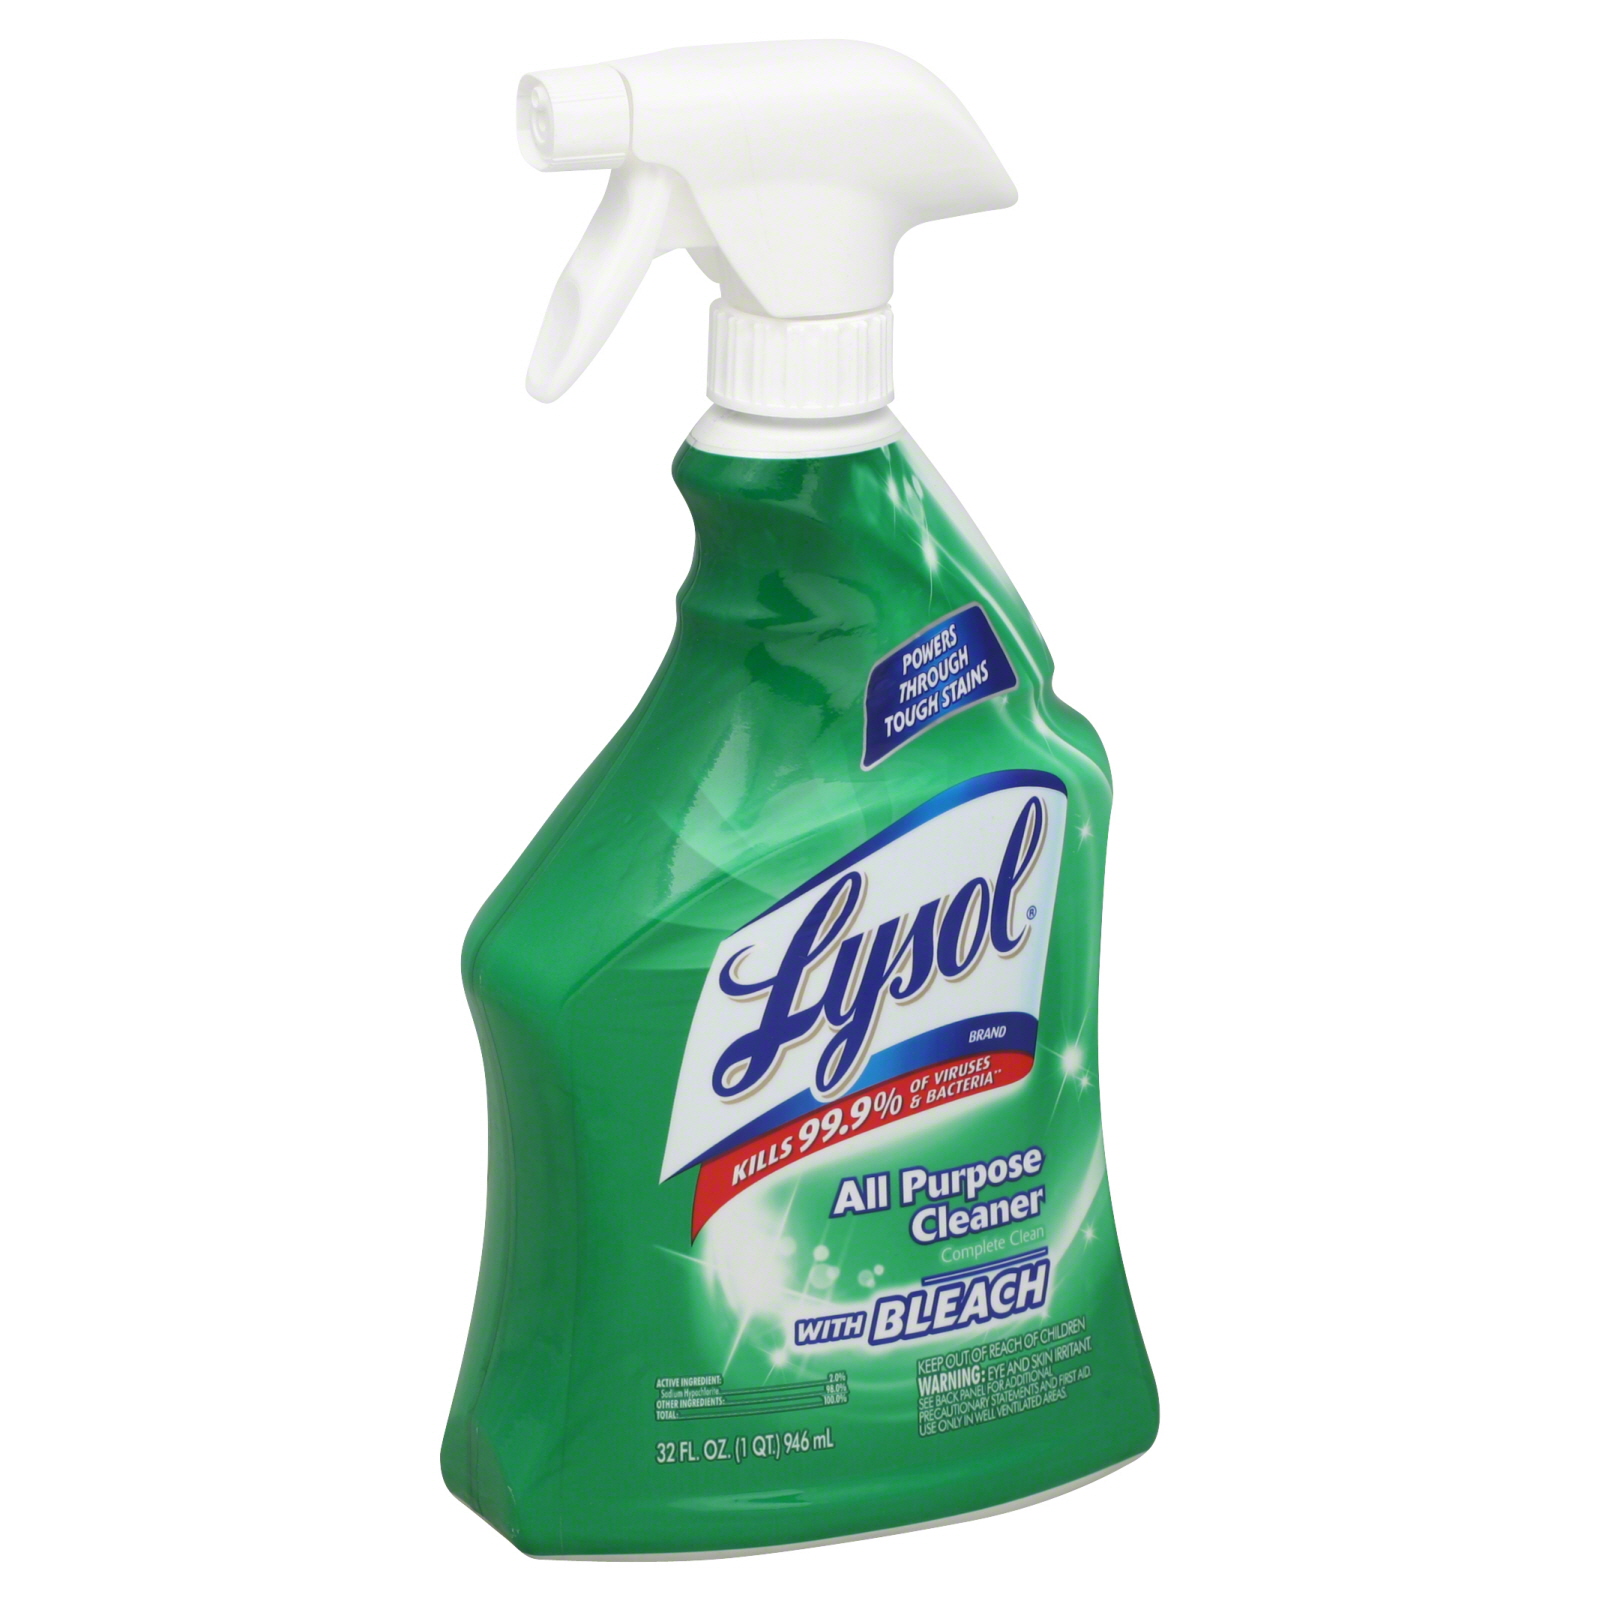 Lysol Cleaner, All Purpose, With Bleach, 32 fl oz (1 qt) 946 ml